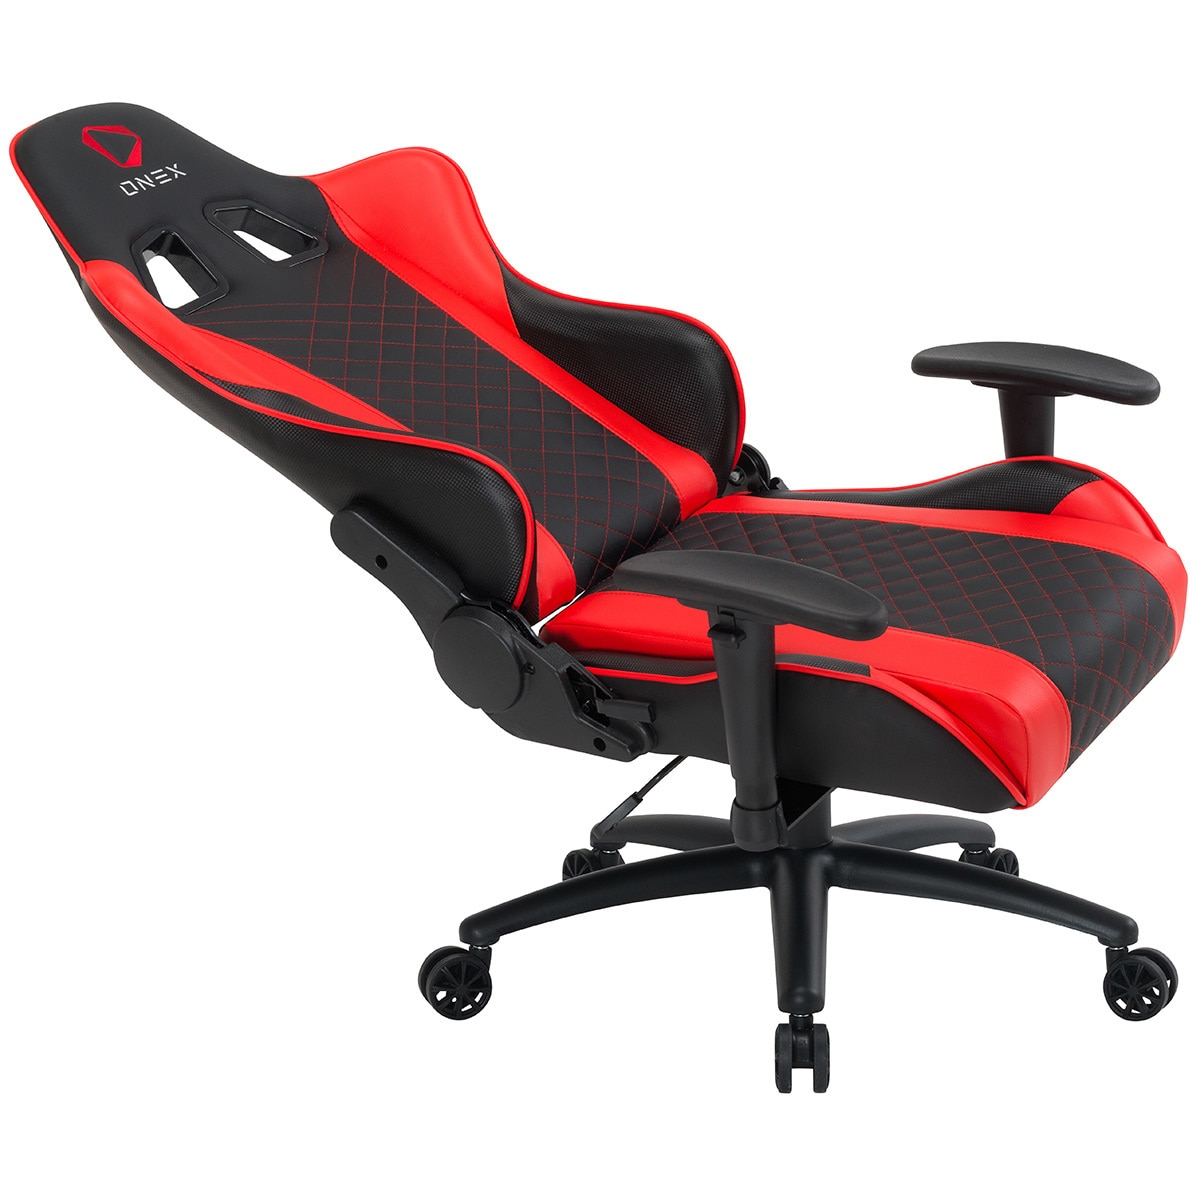 Onex Gaming Chair Gx3 Black Red Costco Australia